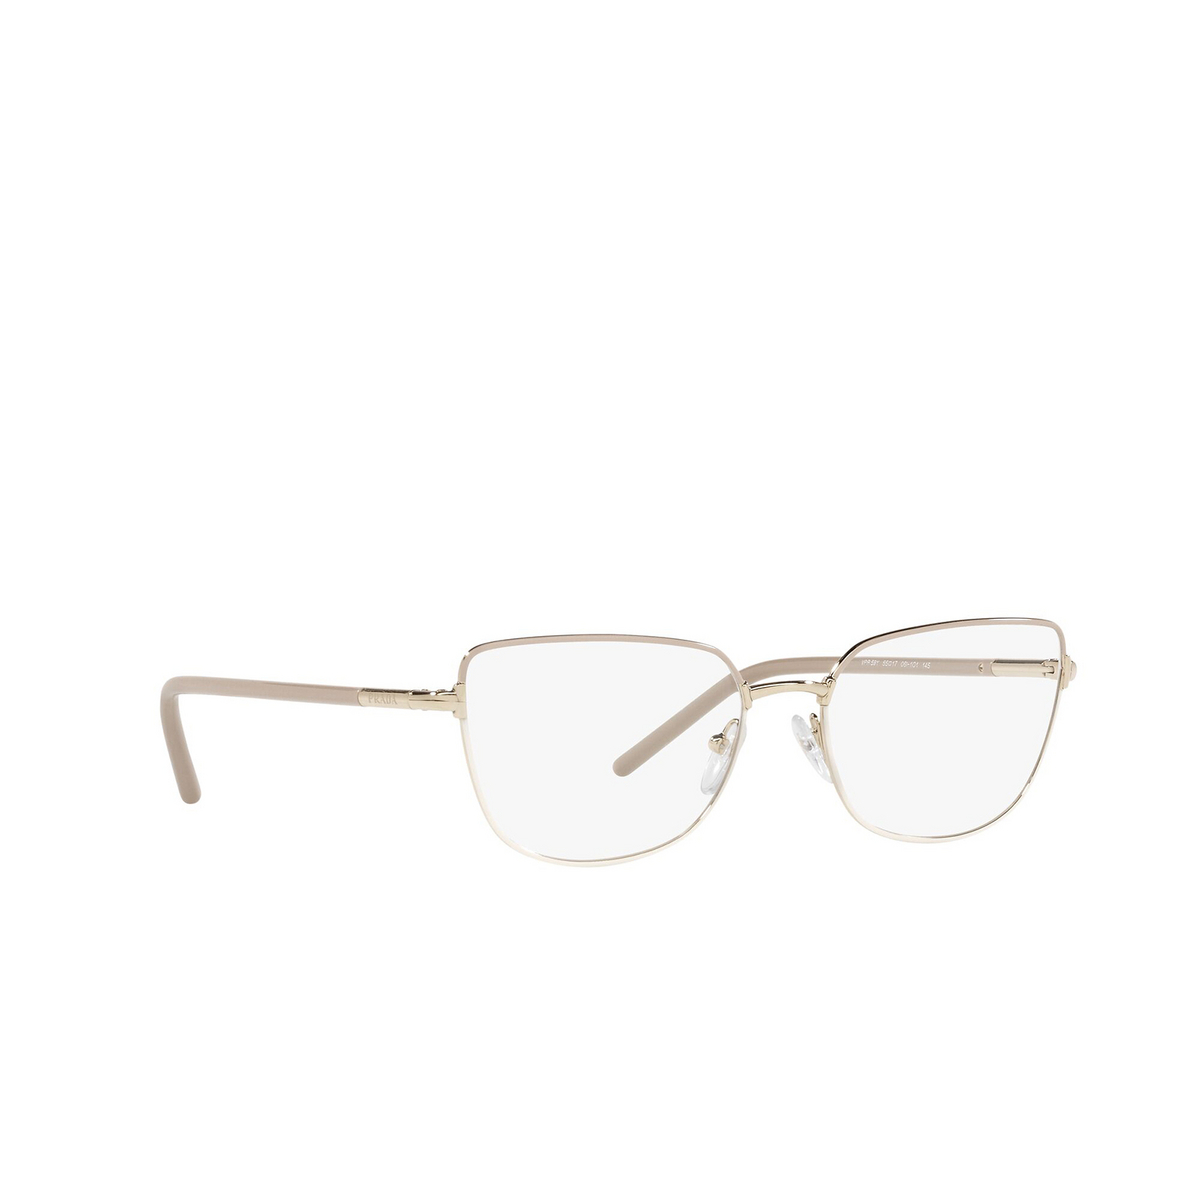 Prada® Butterfly Eyeglasses: PR 59YV color Beige / White 06I1O1 - three-quarters view.